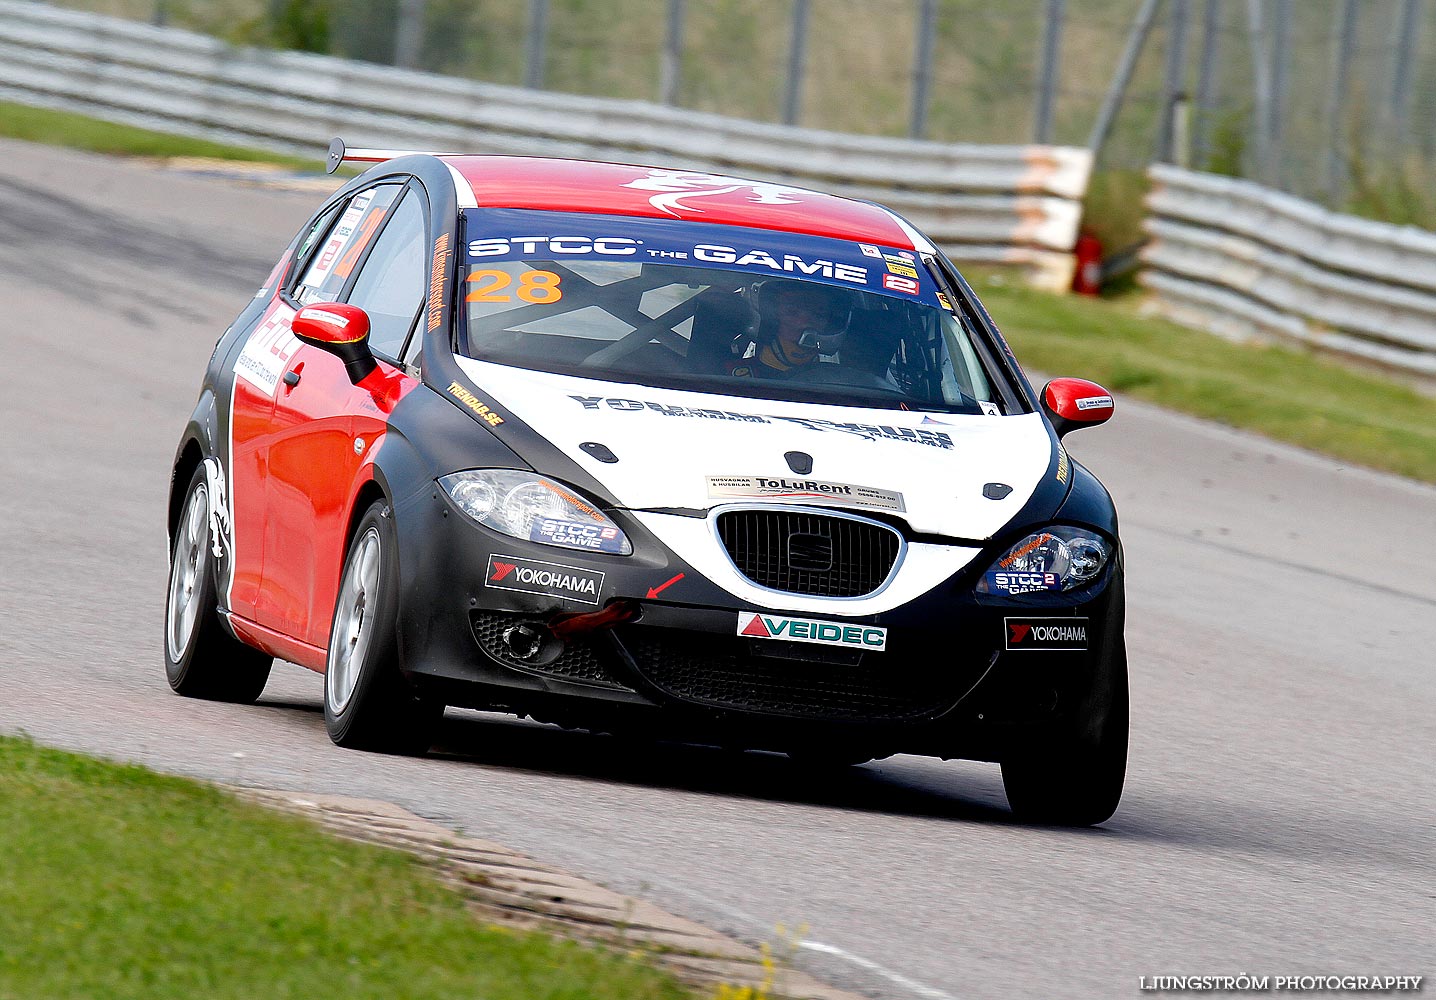 SSK Raceweek,mix,Kinnekulle Ring,Götene,Sverige,Motorsport,,2011,44488